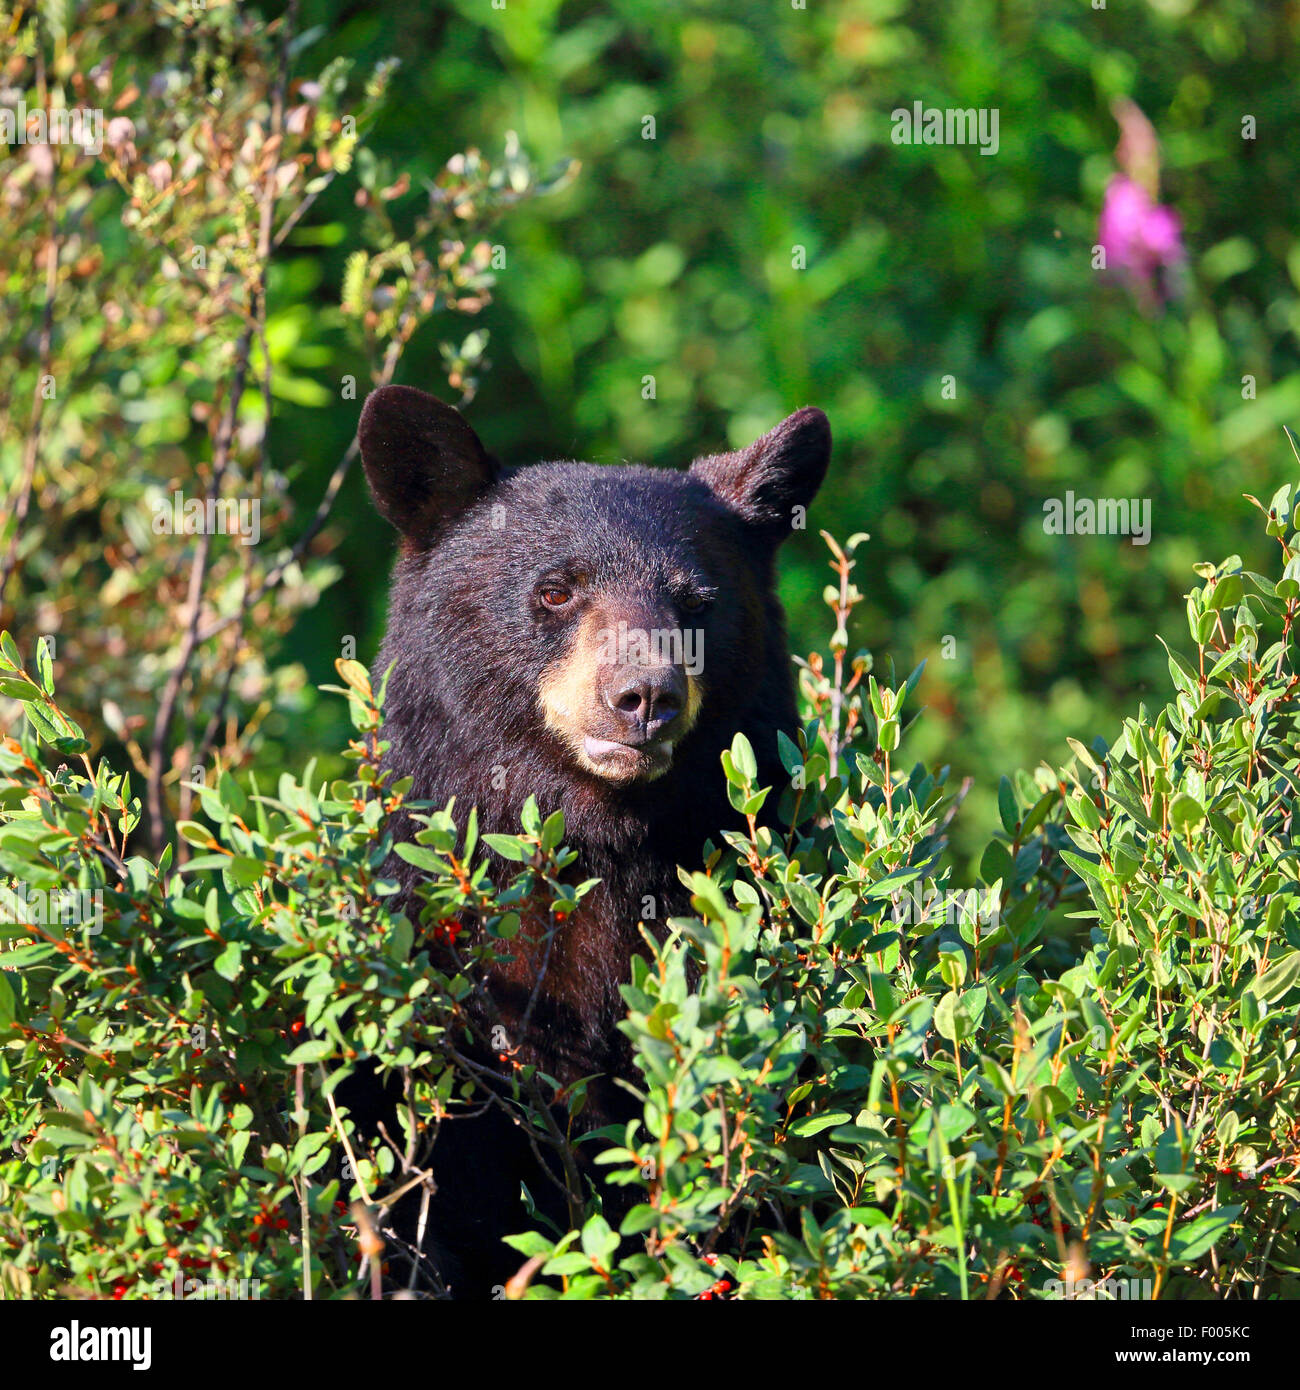 American black bear (Ursus americanus), bear standing in willows shrubs, Canada, Alberta, Banff National Park Stock Photo